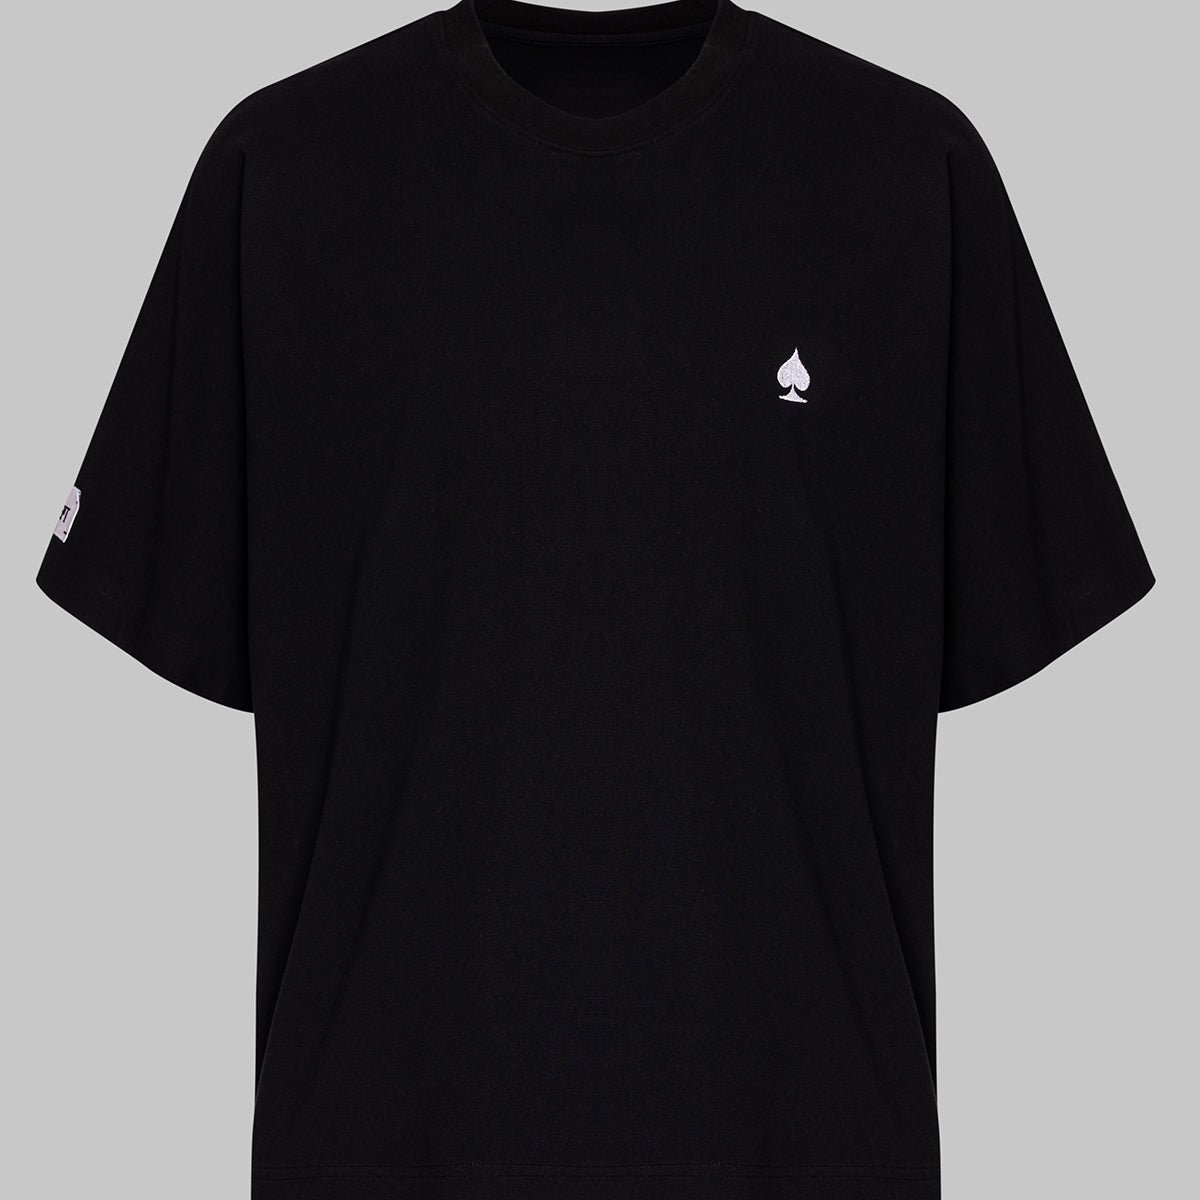 White Spade Black T-Shirt
